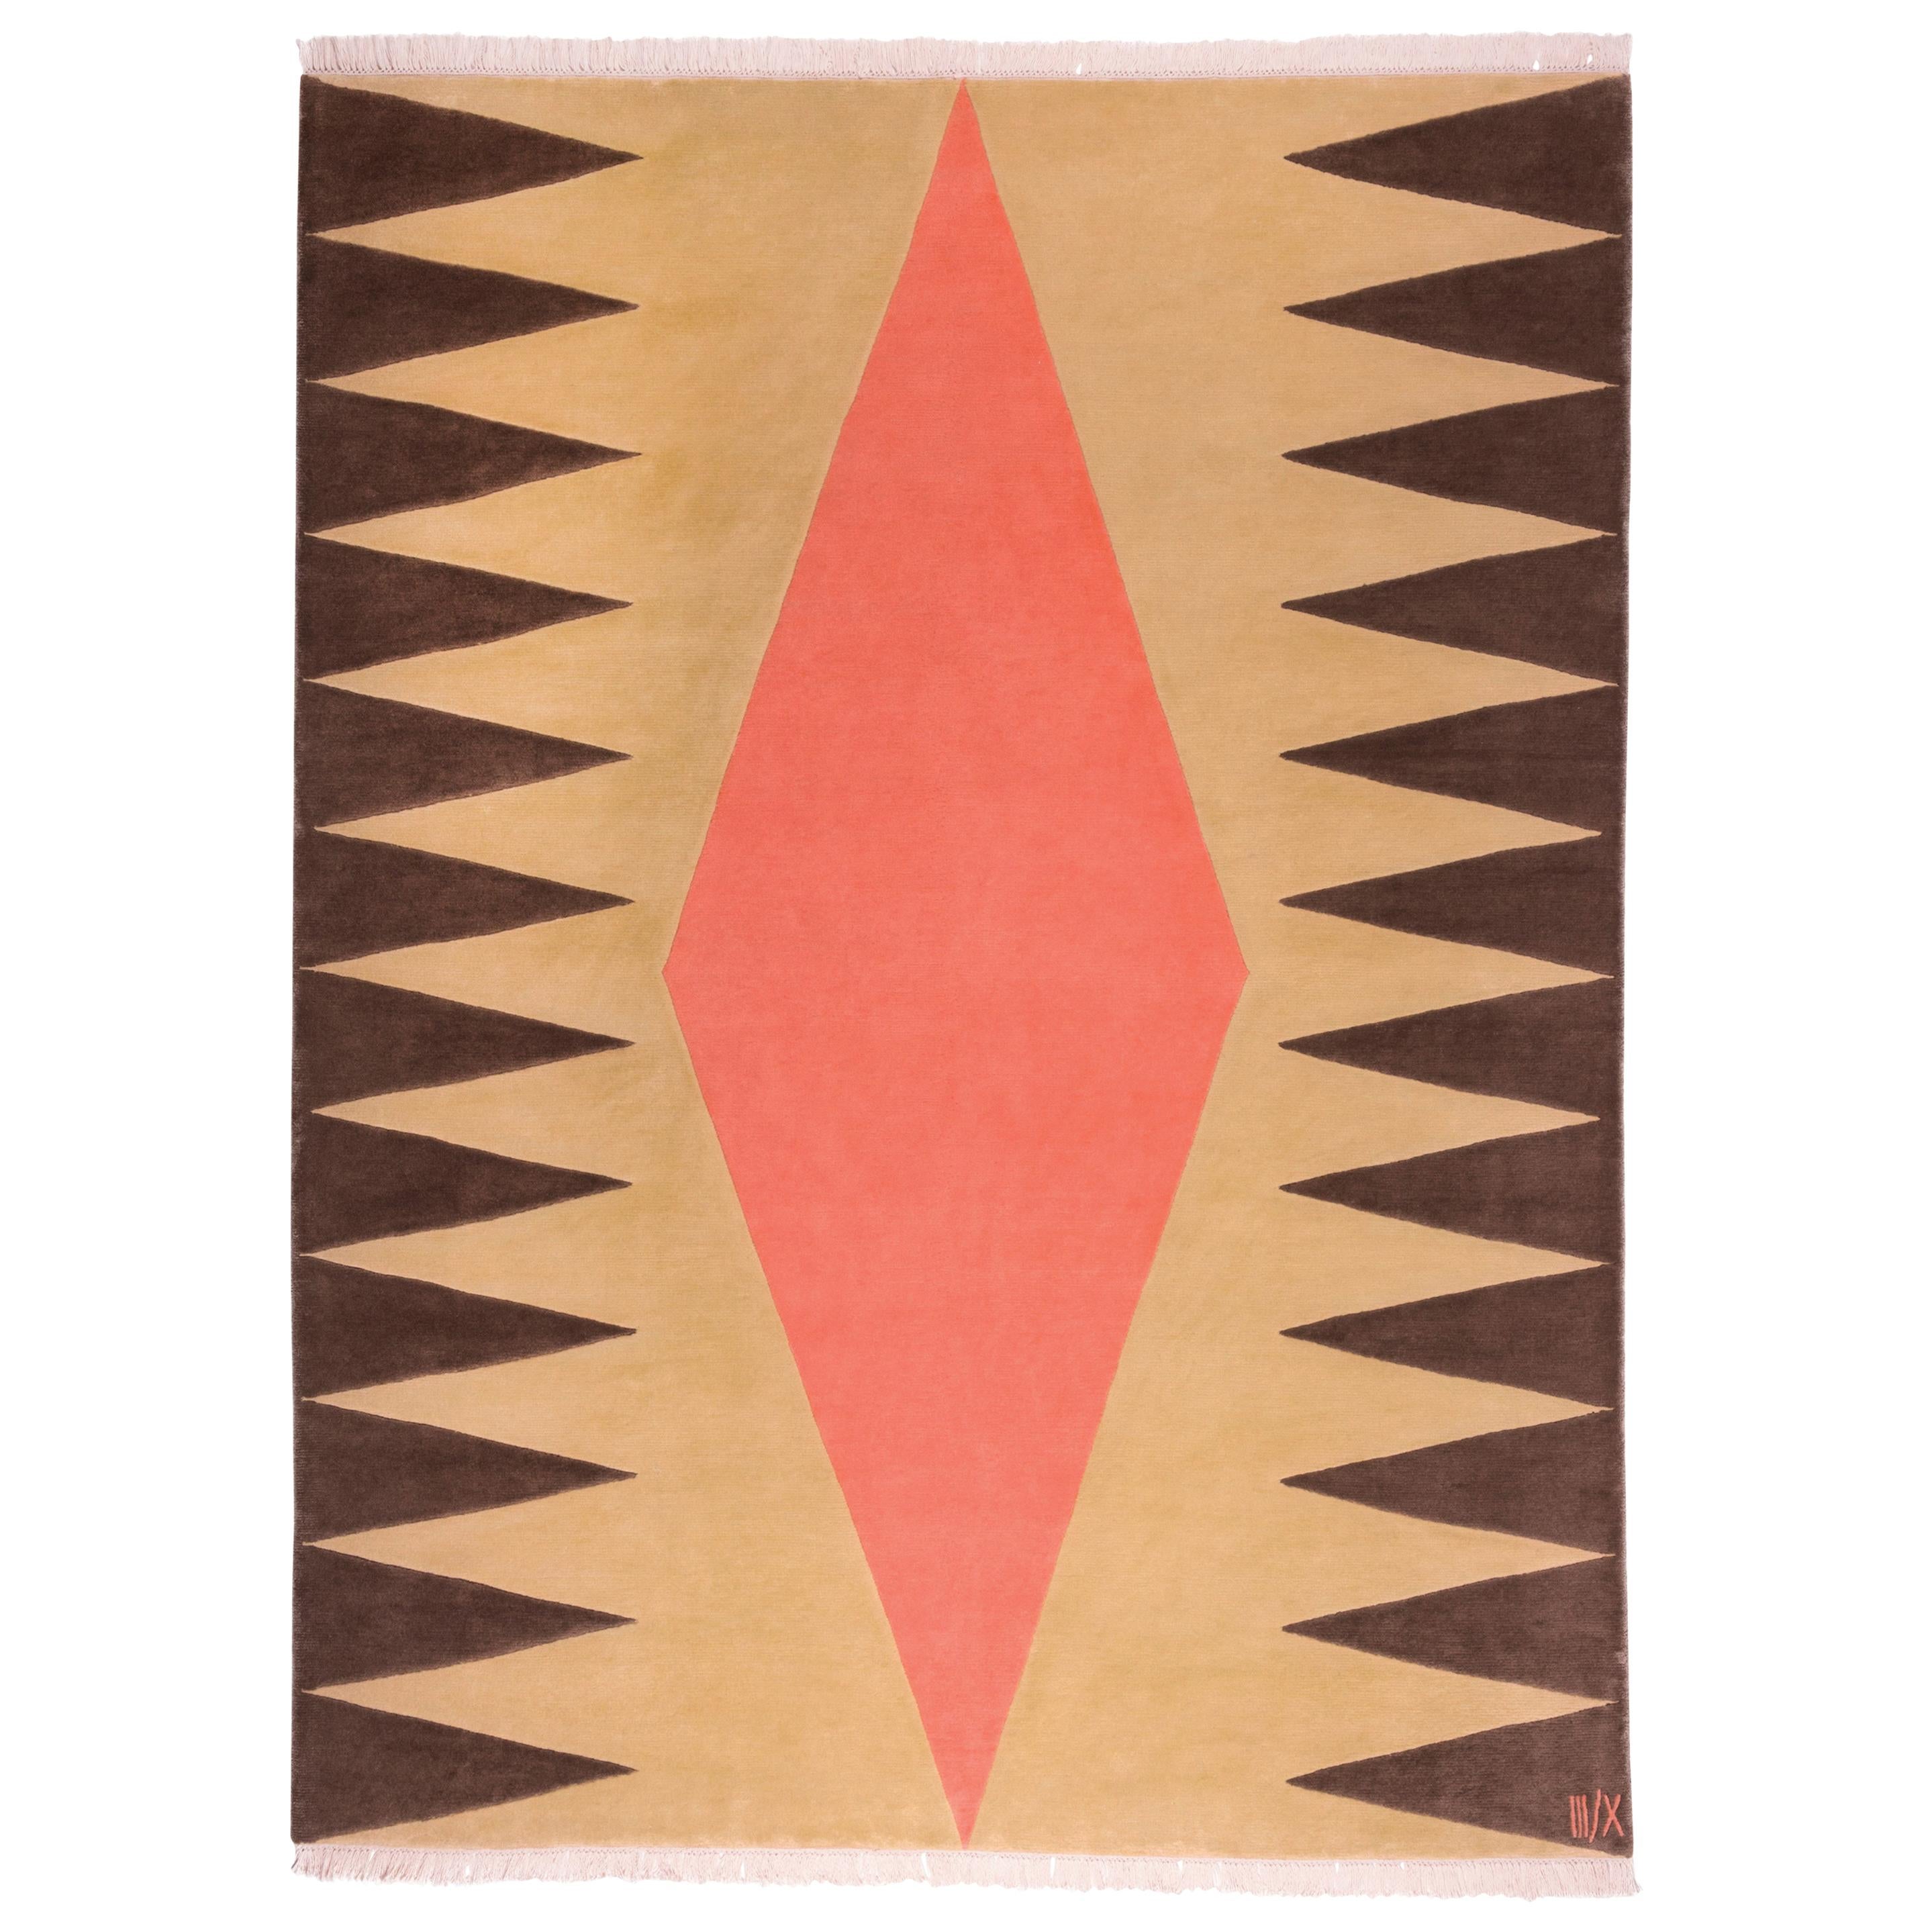 Rug Interior Orange - Geometric Beige Peach Brown Wool Patterns by Carpets CC  For Sale